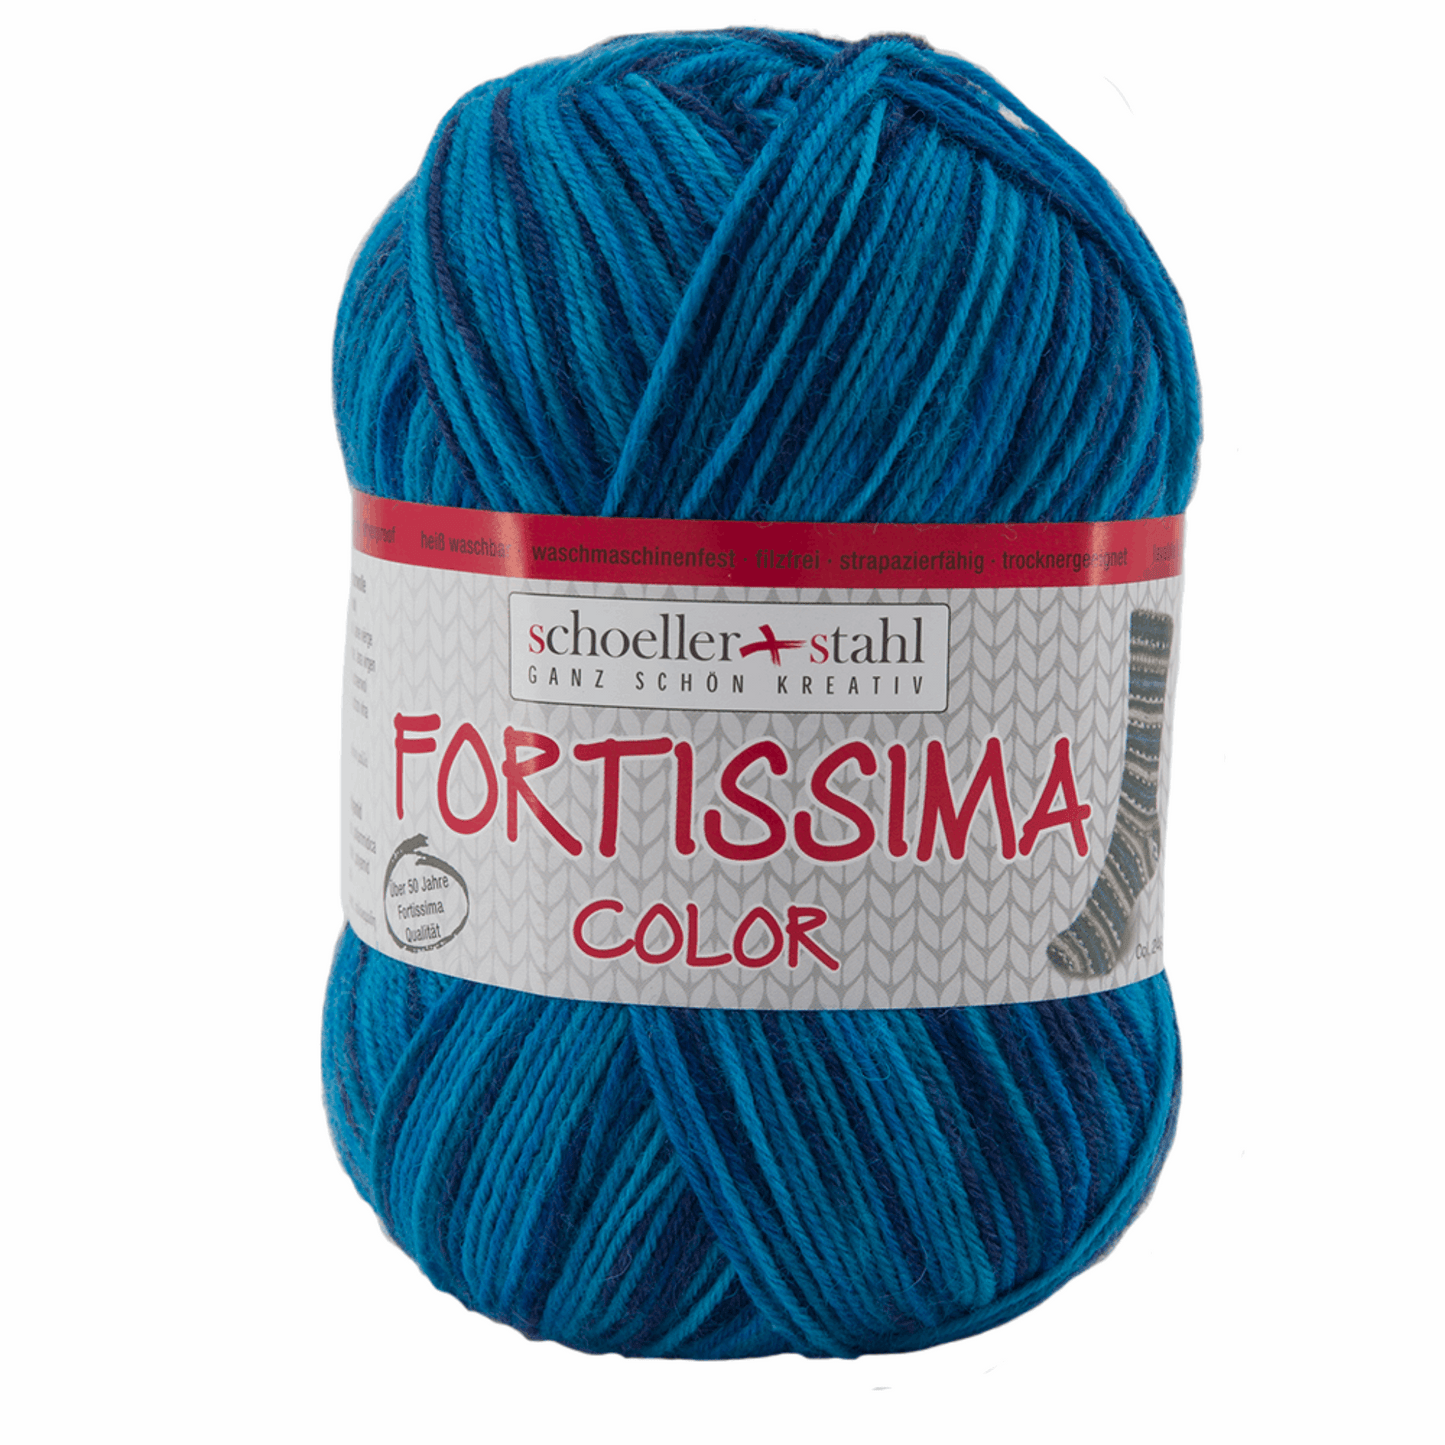 Fortissima socka 4fädig, 90028, Farbe 2451, lagune